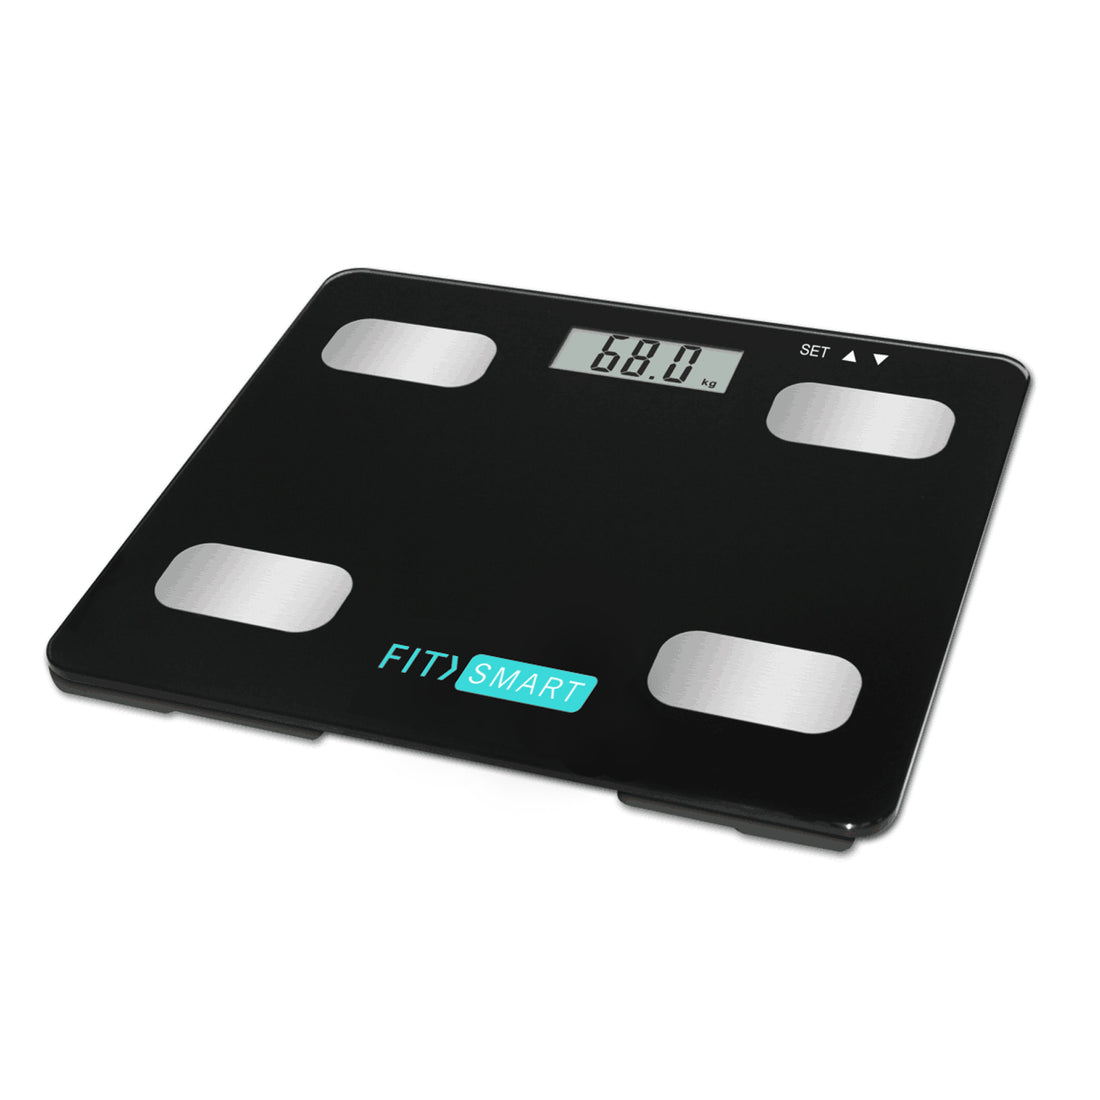 FitSmart Electronic Floor Body Scale Digital LCD Glass Tracker Bathroom-Bathroom Accessories-PEROZ Accessories